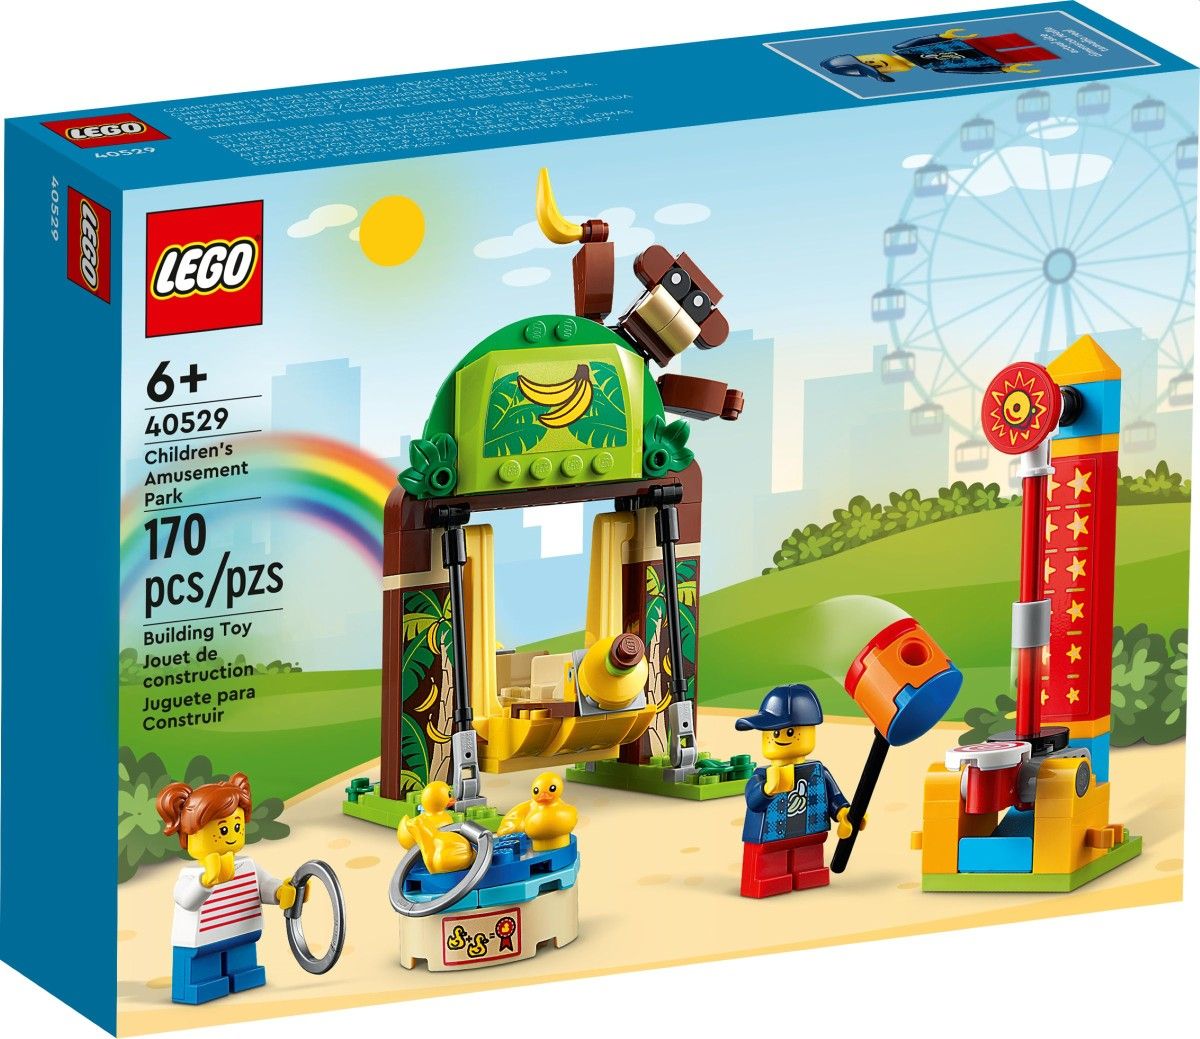 LEGO® GWP 40529 – Children’s Amusement Park – Recensione